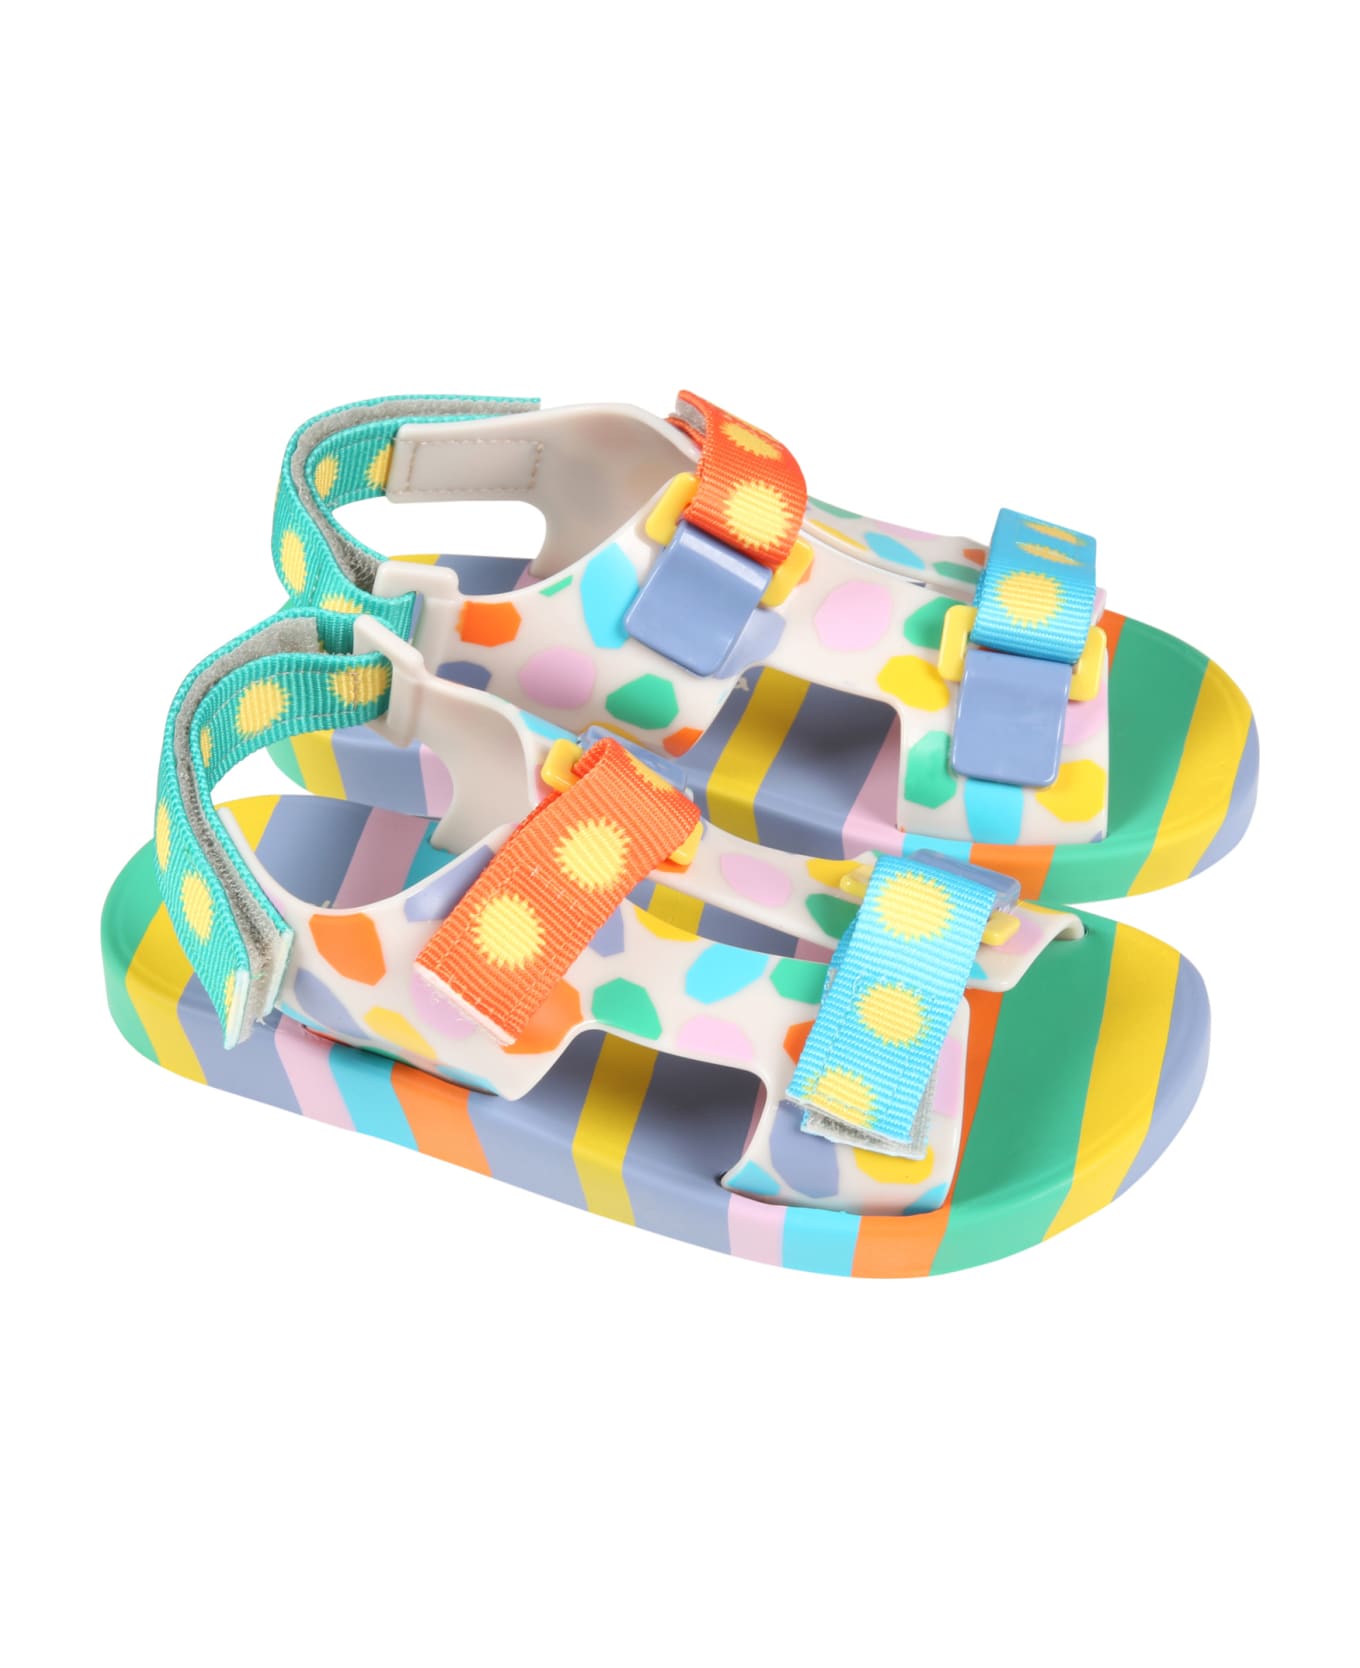 Melissa Multicolor Sandals For Kids With Sun - Multicolor シューズ